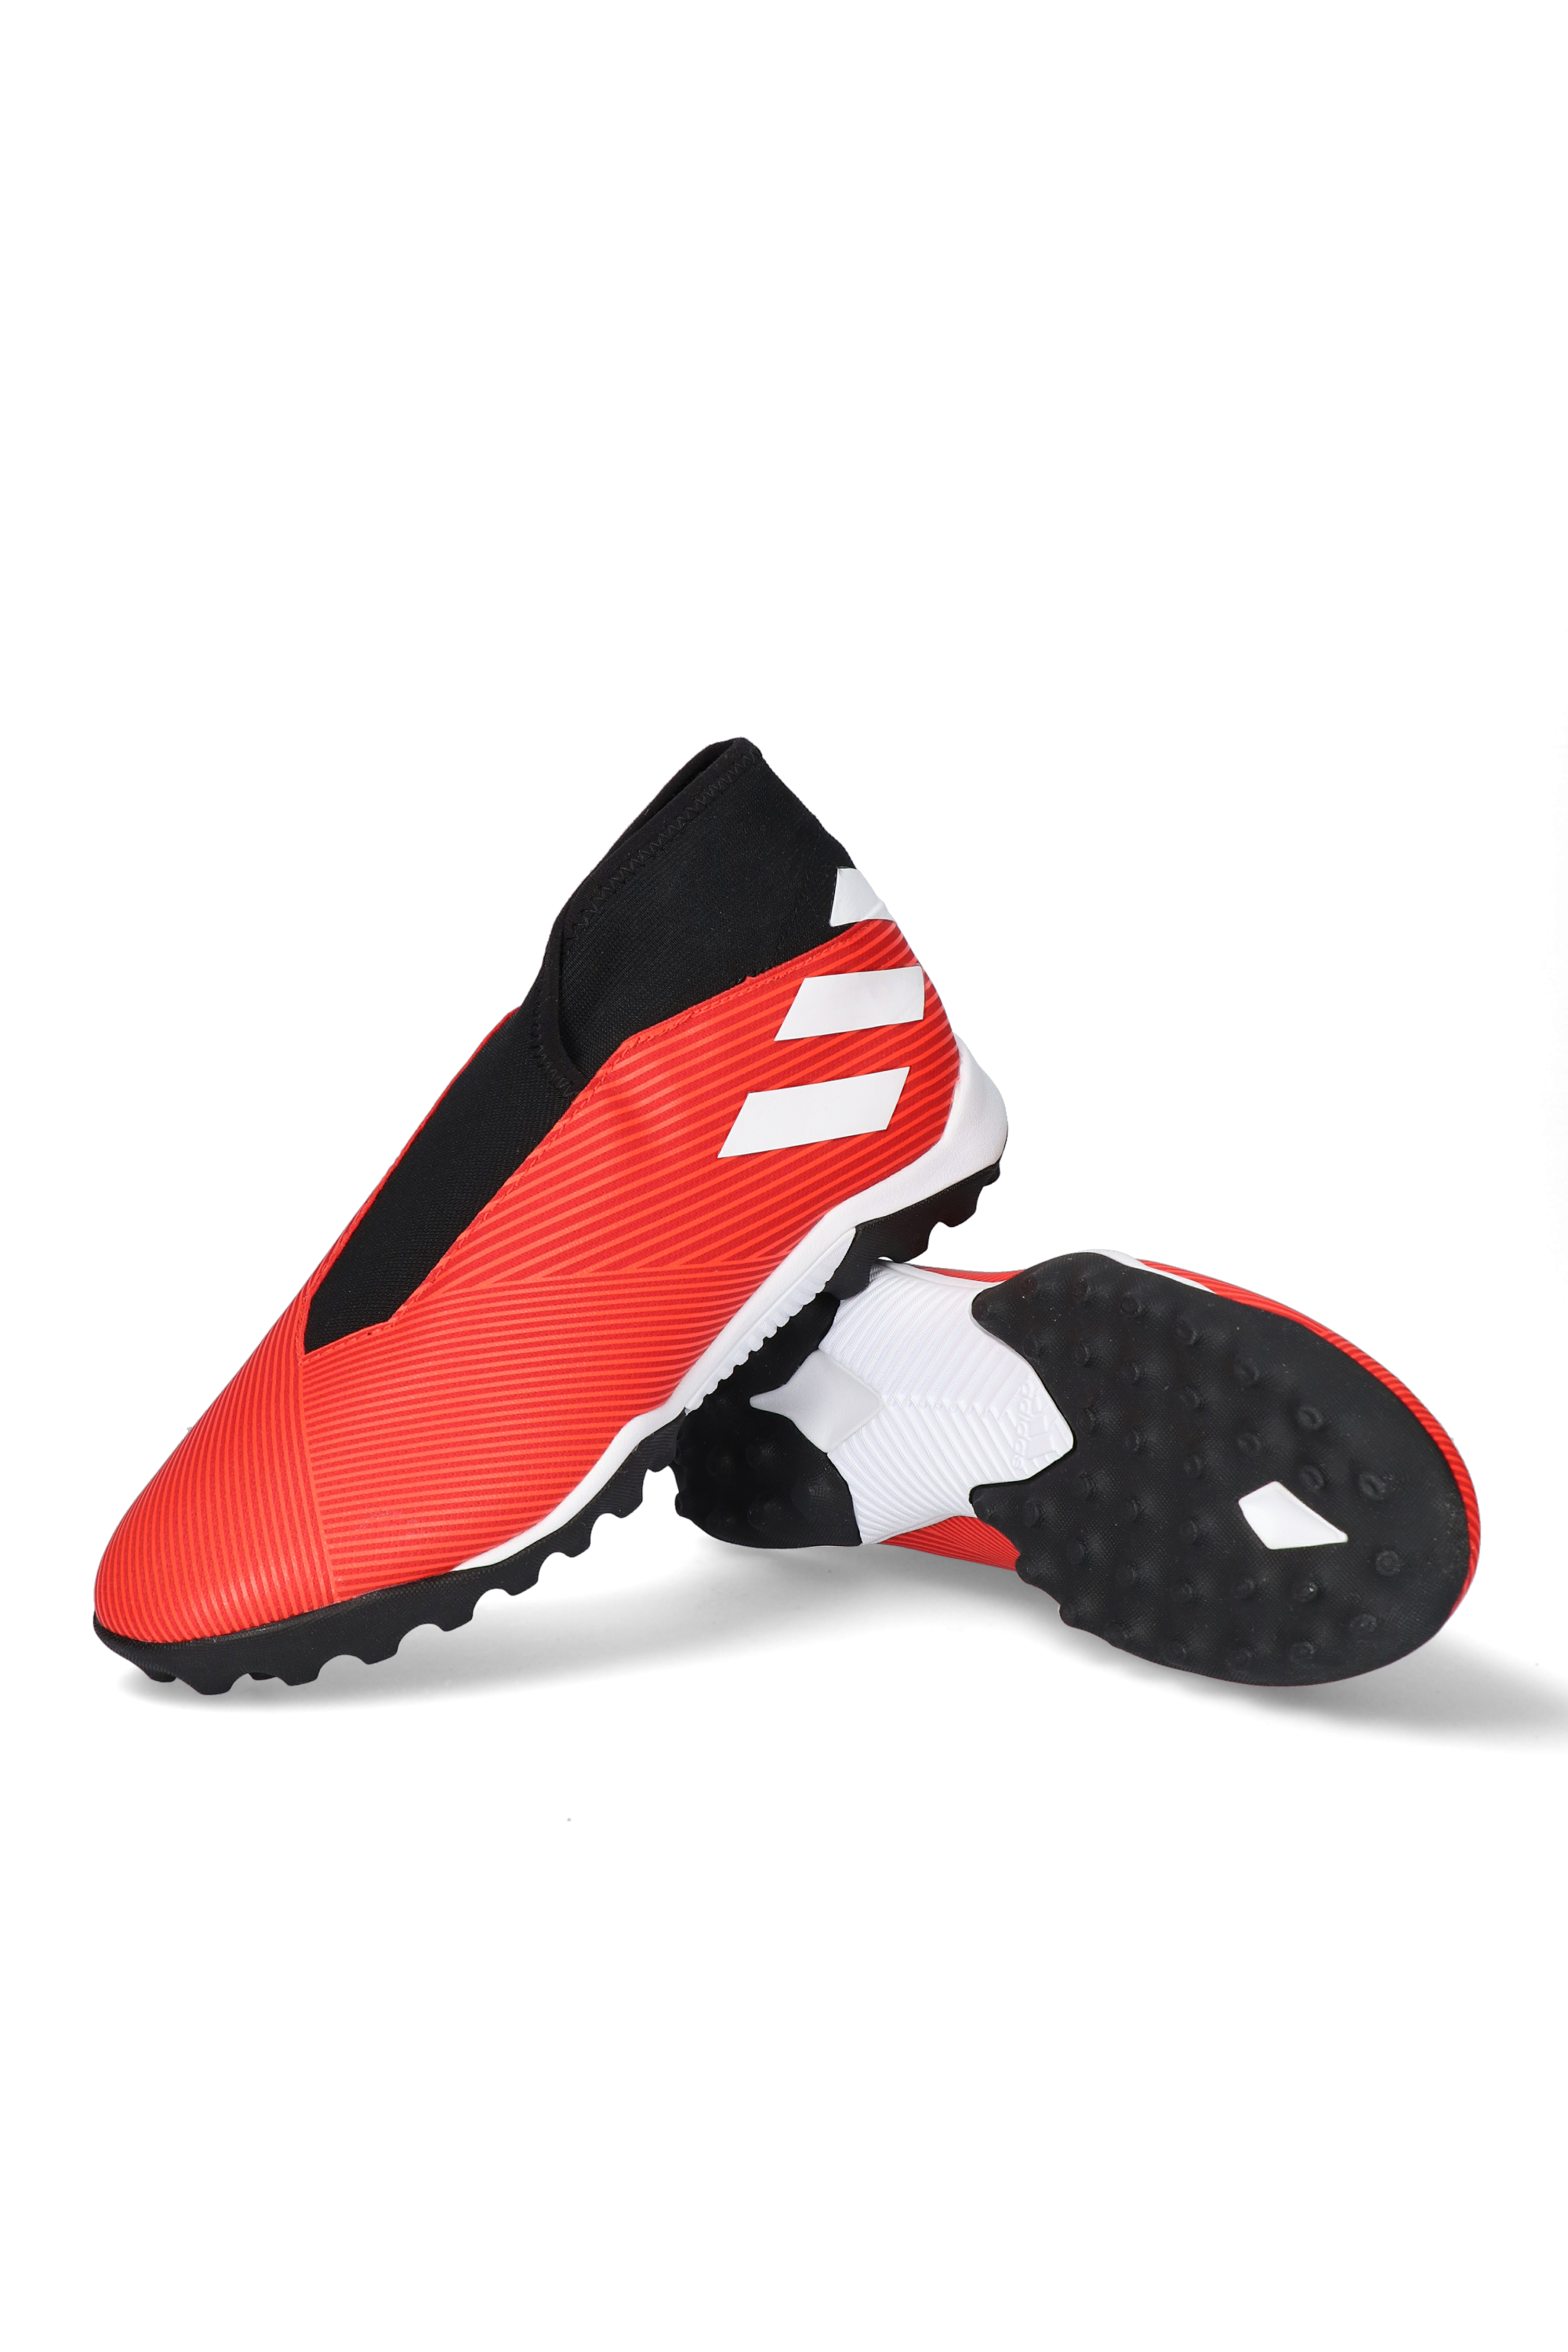 adidas Nemeziz 19.3 LL TF | R-GOL.com - Football boots \u0026 equipment